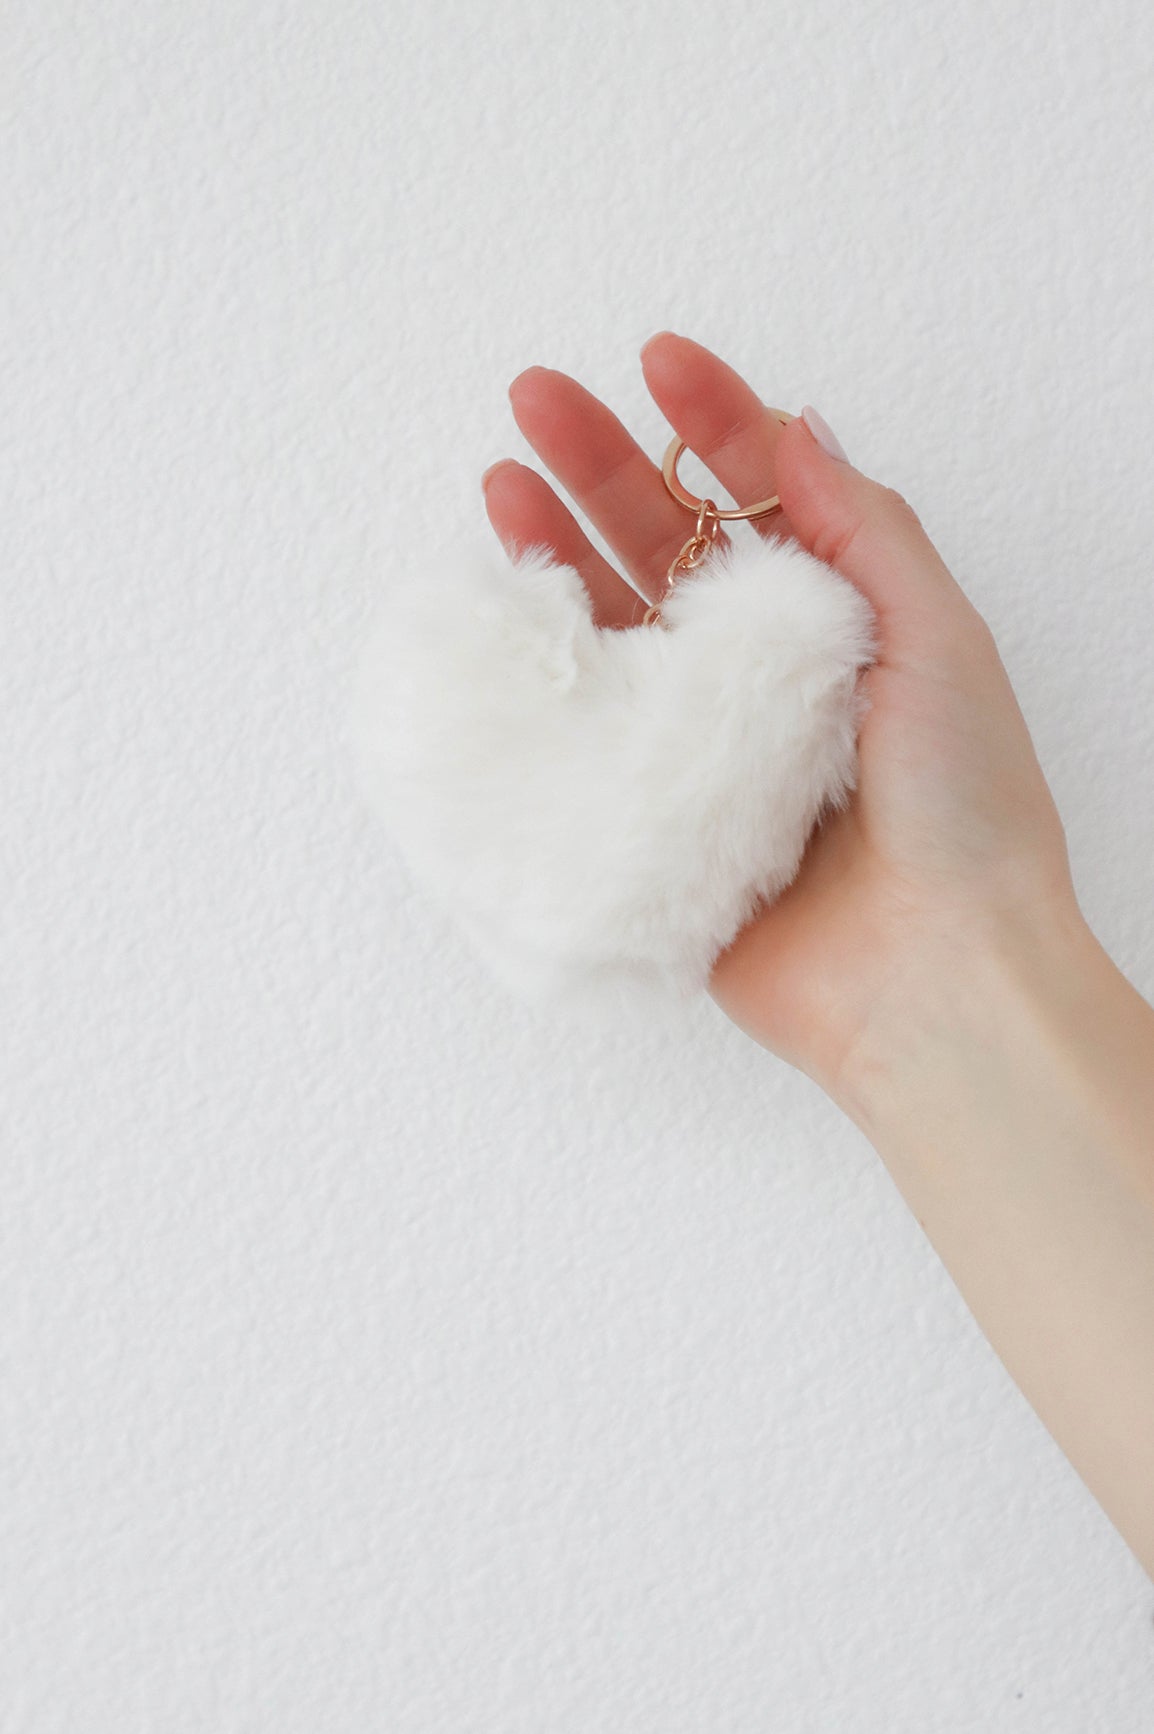 White fluffy heart keychain